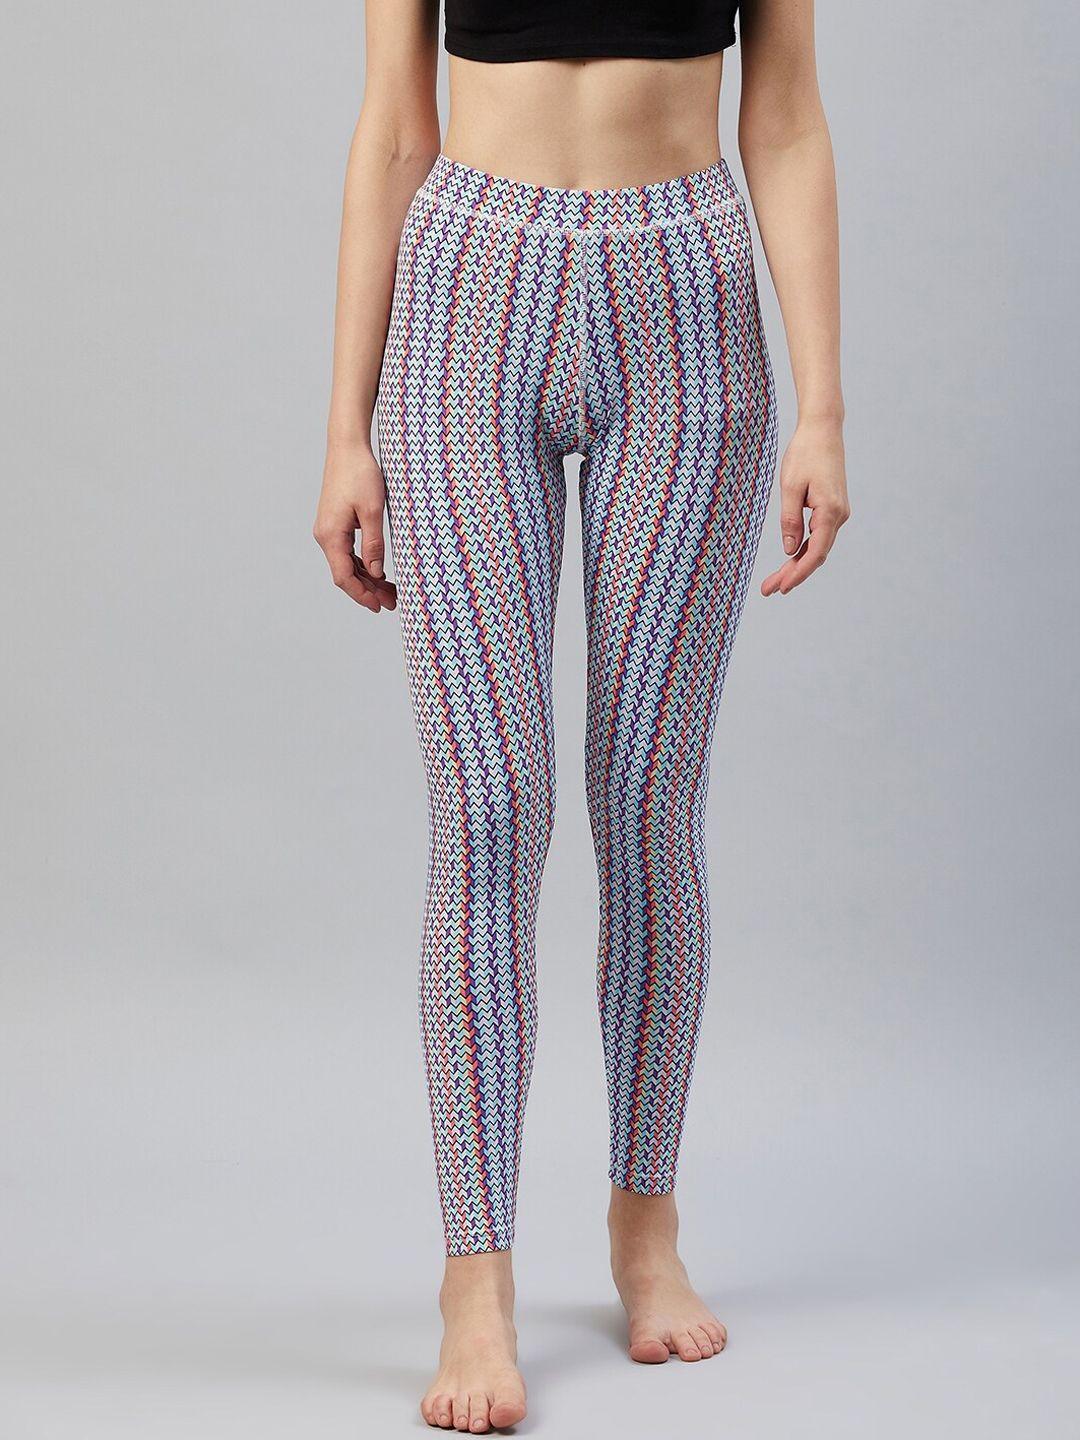 c9 airwear women multicolored printed yoga track pants